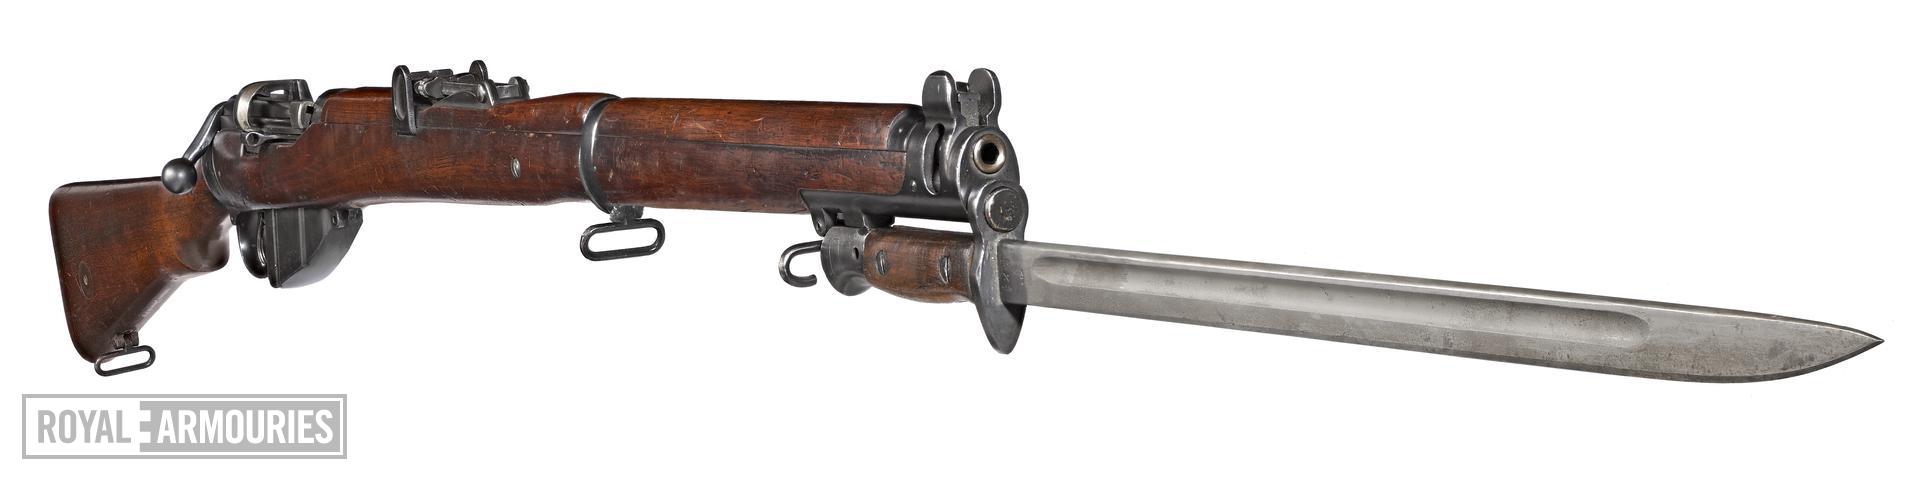 Short, Magazine Lee Enfield (SMLE) rifle and Pattern 1907 bayonet (1903).jpg